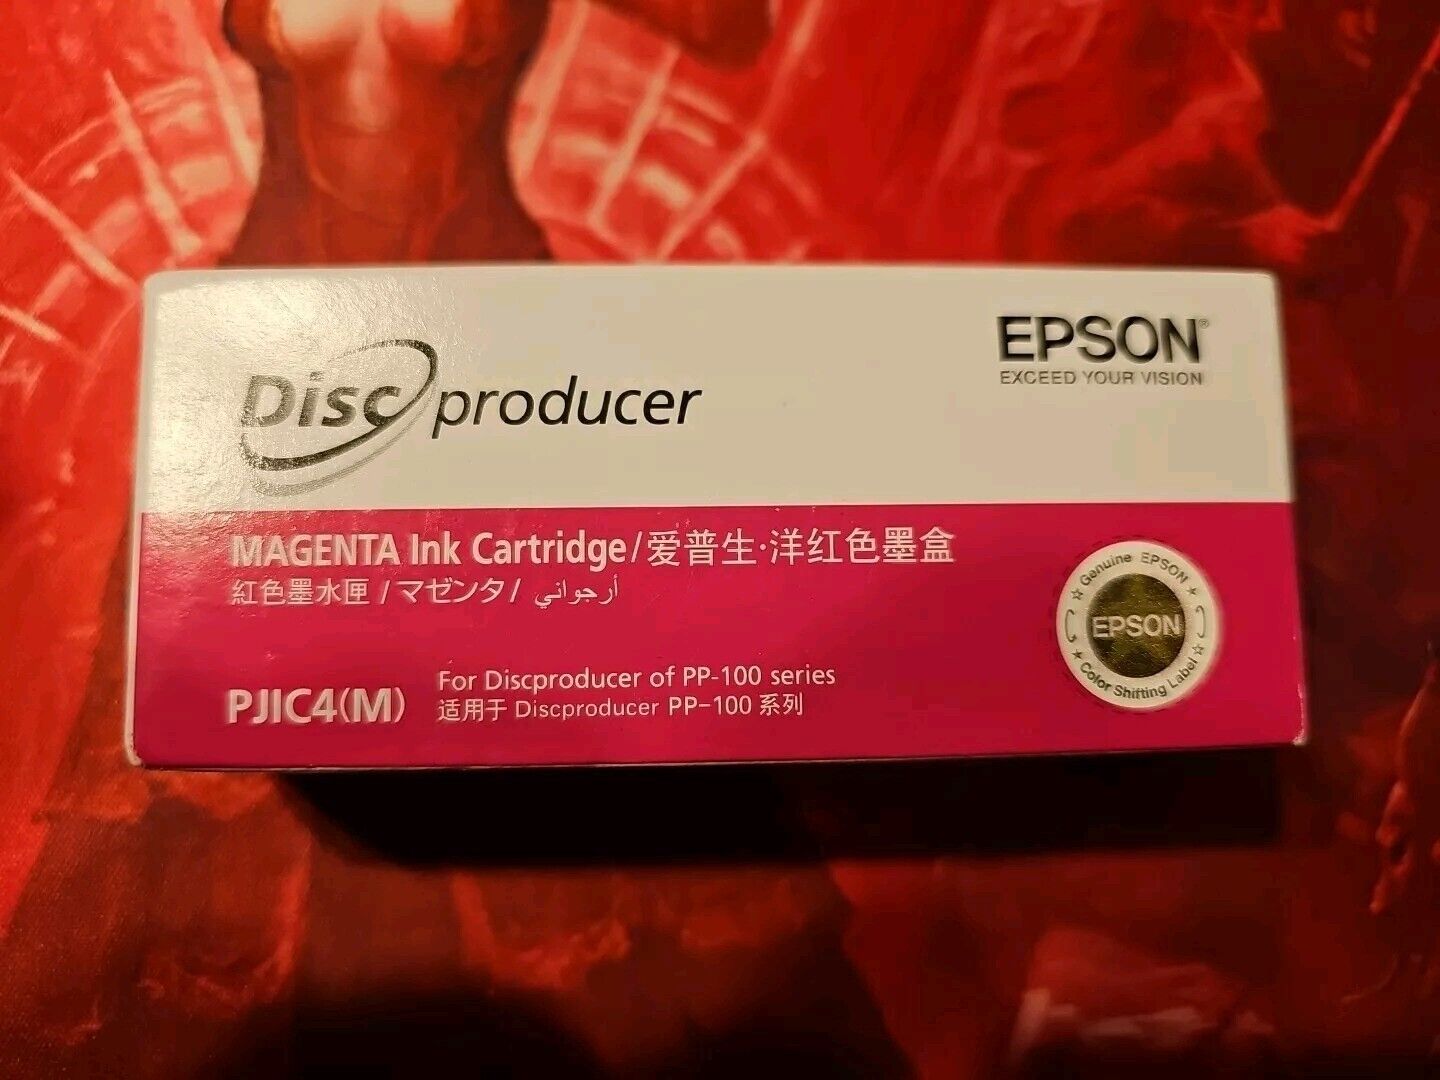 Epson Discproducer PP-100 / PP-50 MAGENTA Ink Cartridge (C13S020450)